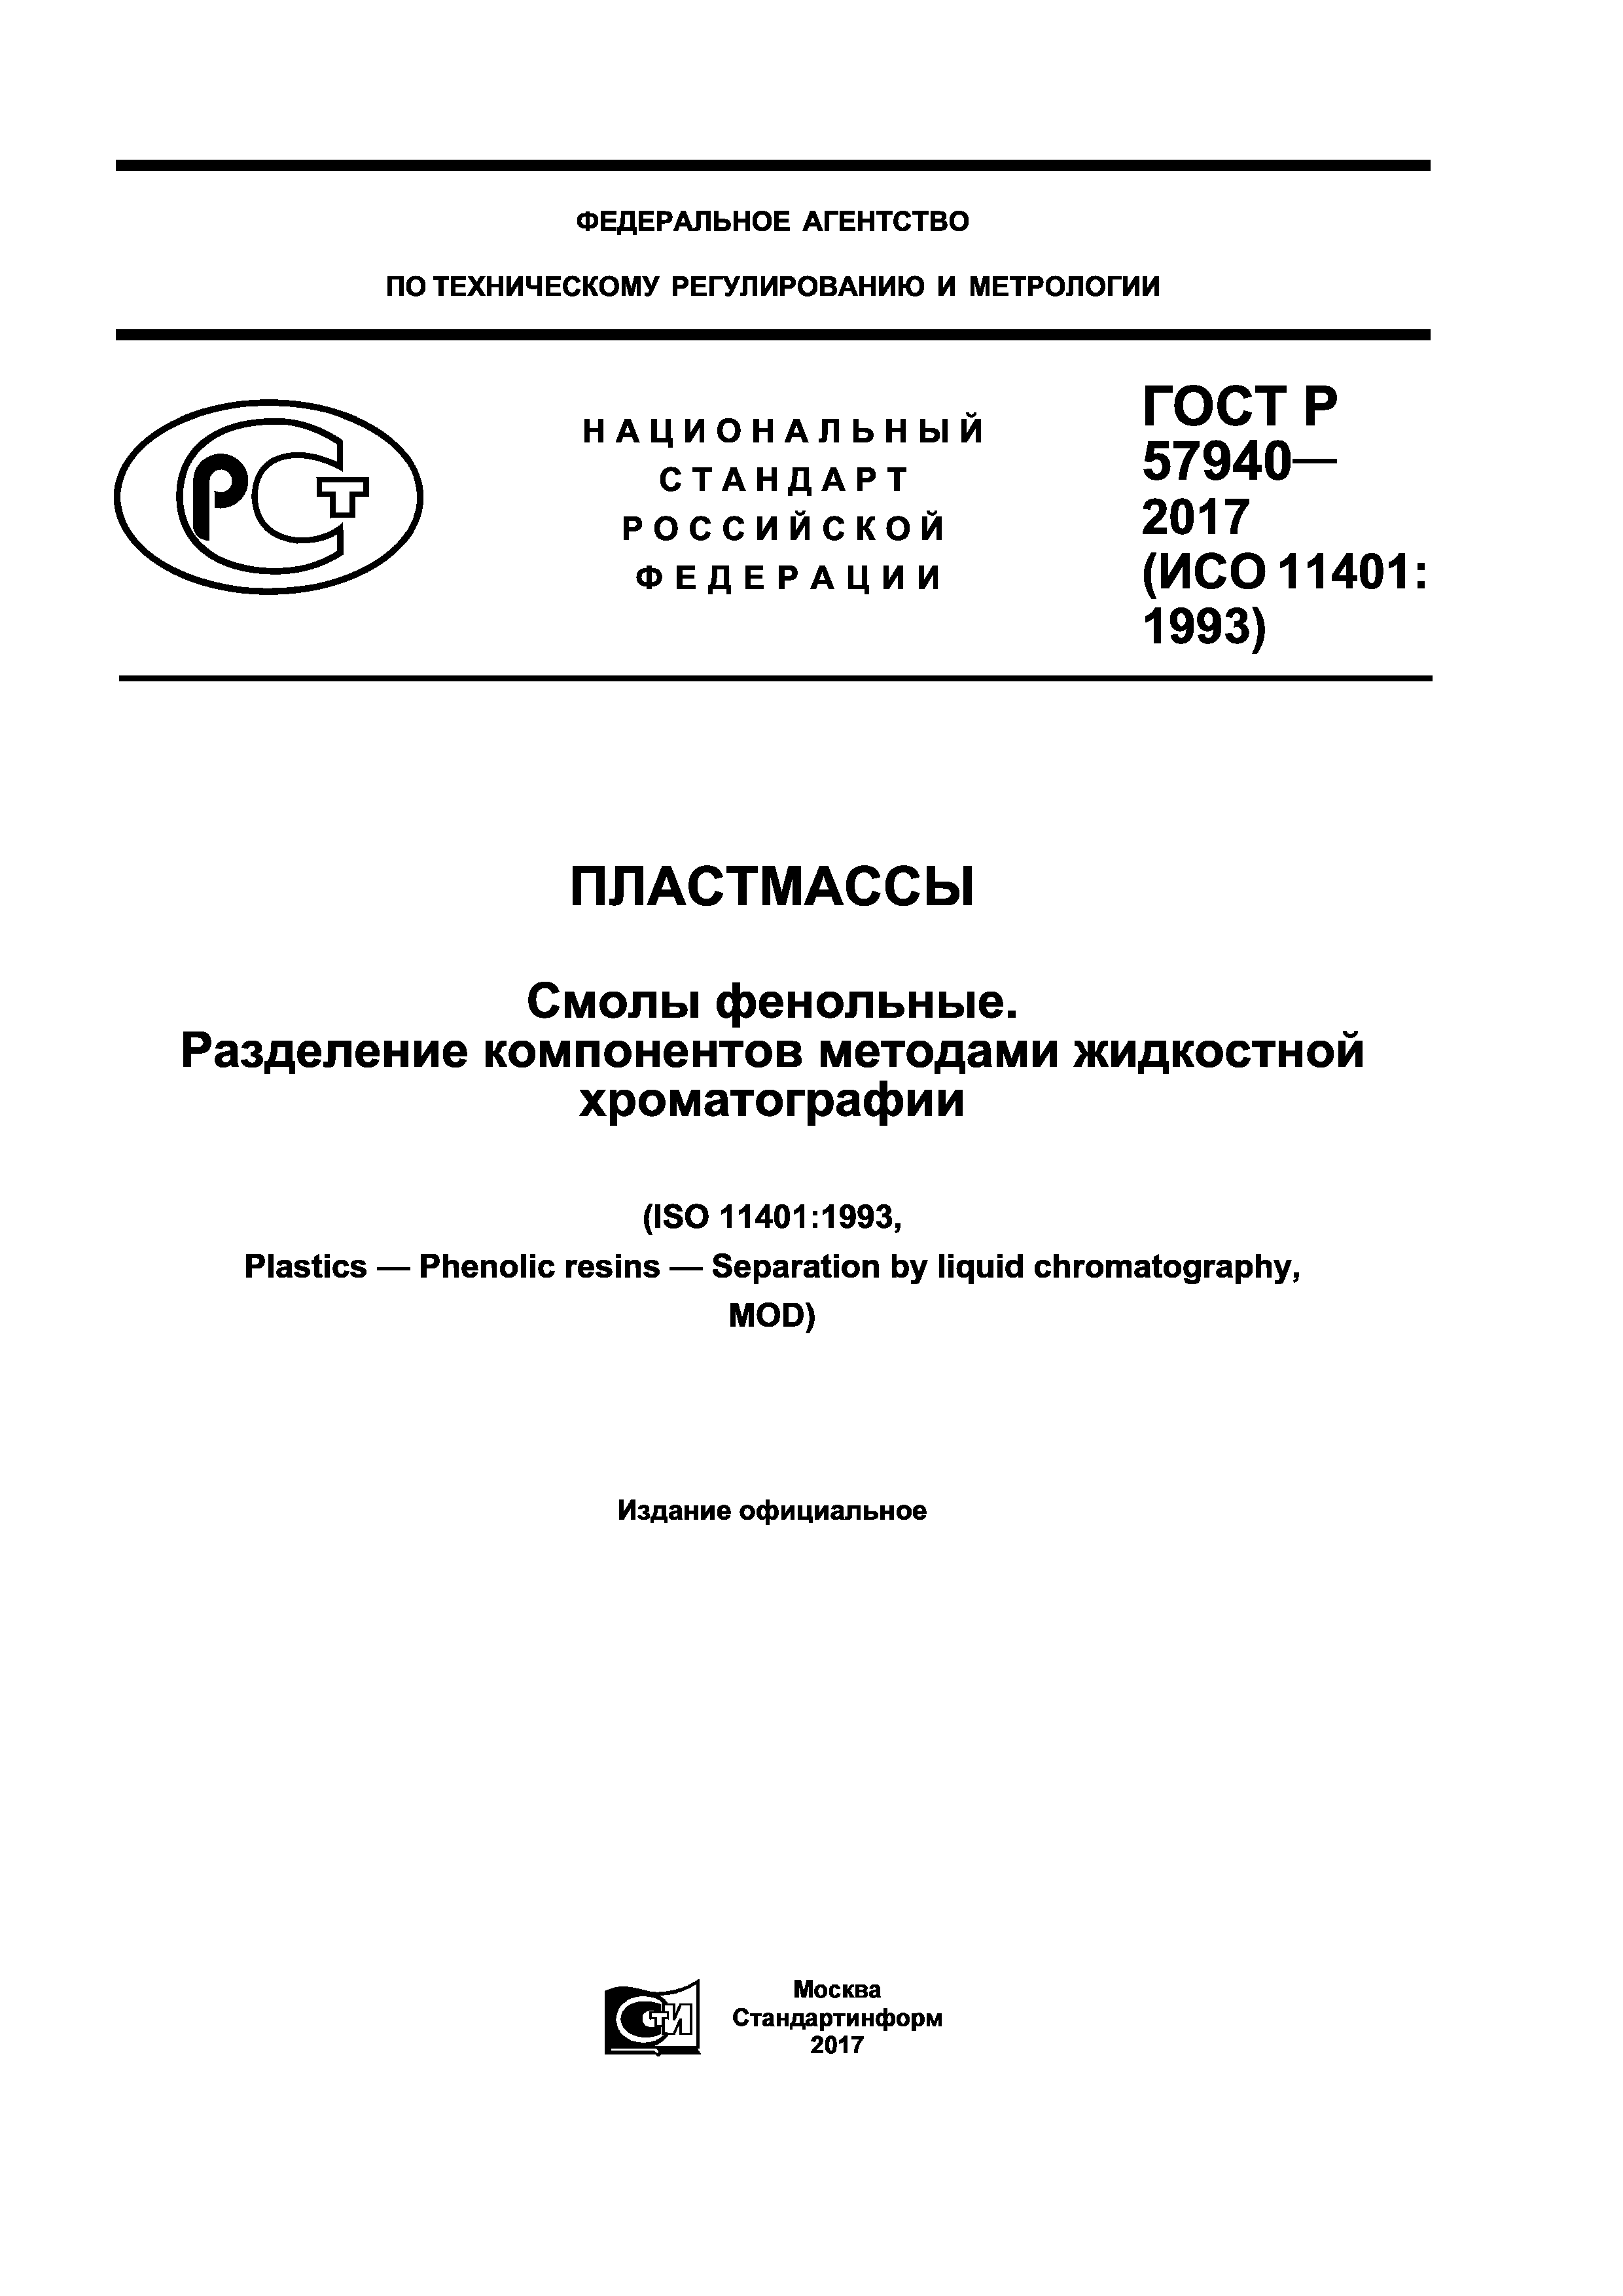 ГОСТ Р 57940-2017